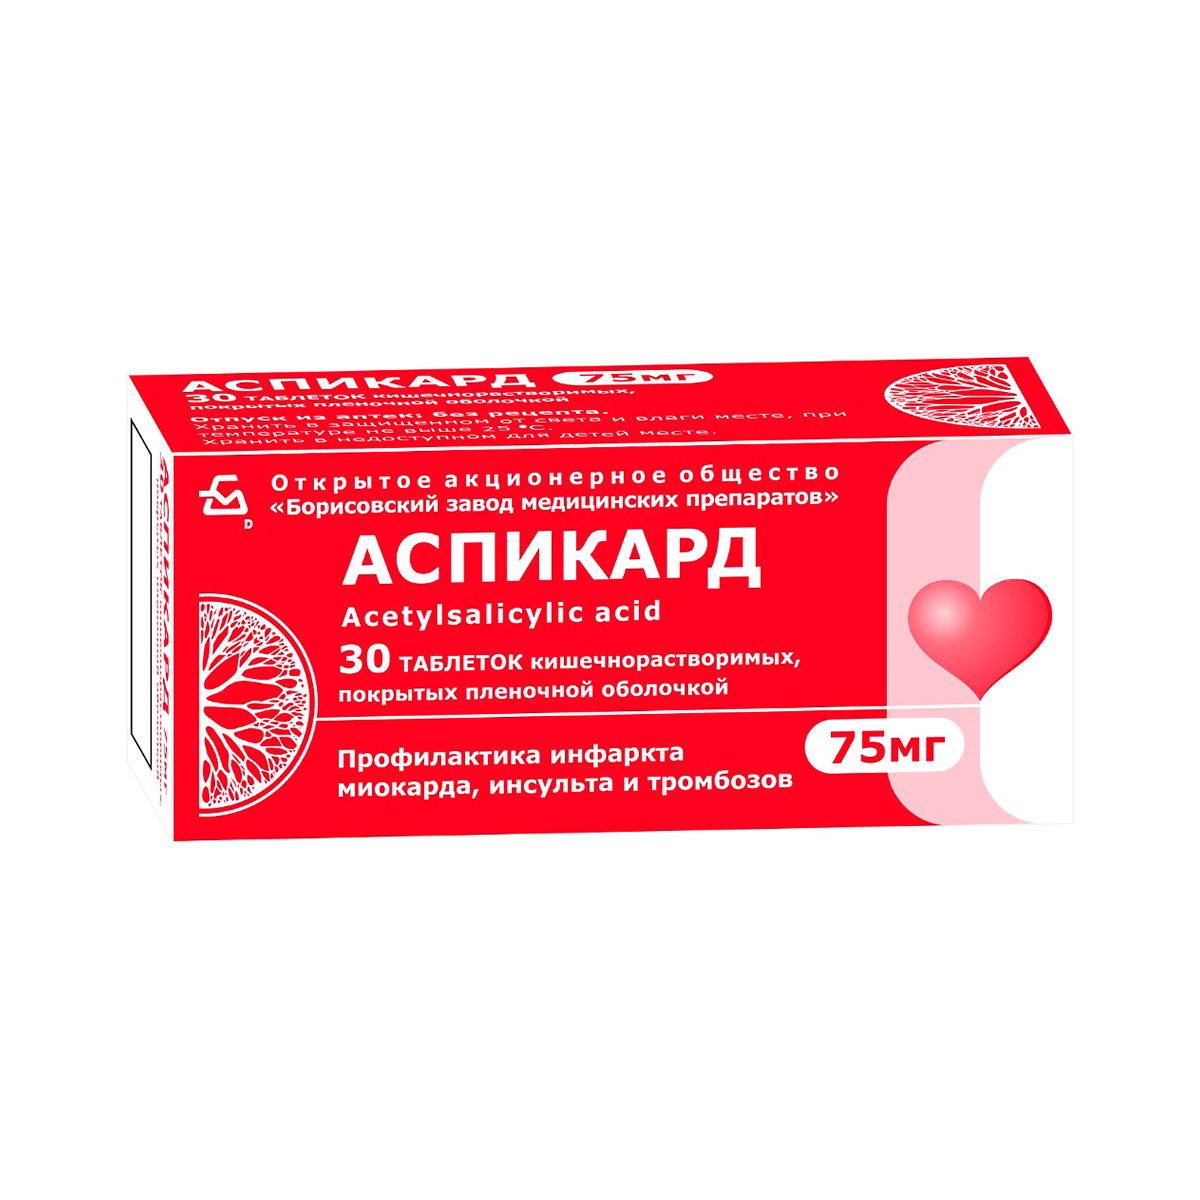 Аспикард 75 мг таблетки кишечнорастворимые 30 шт